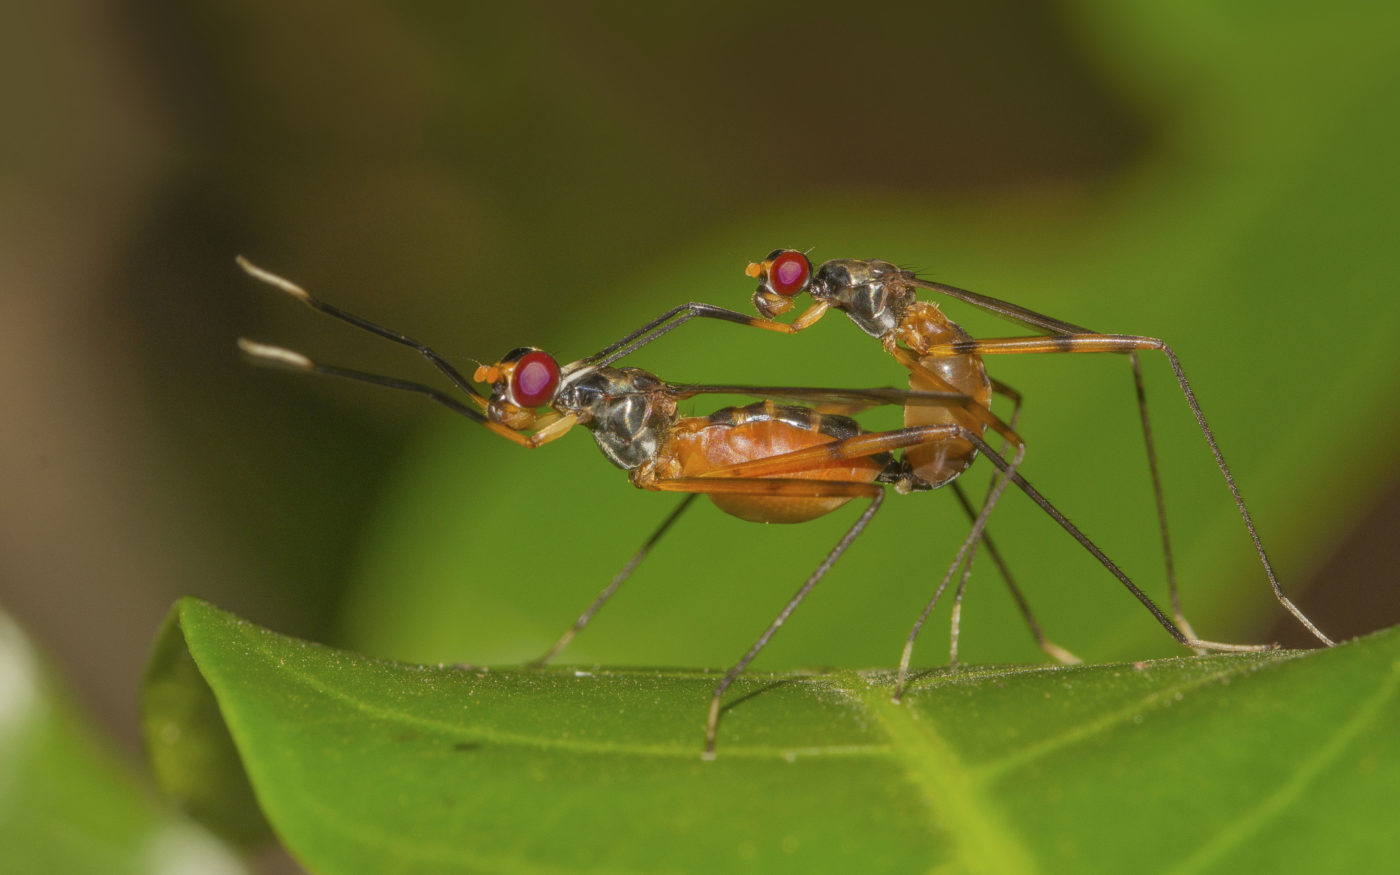 Long-legged flies mating